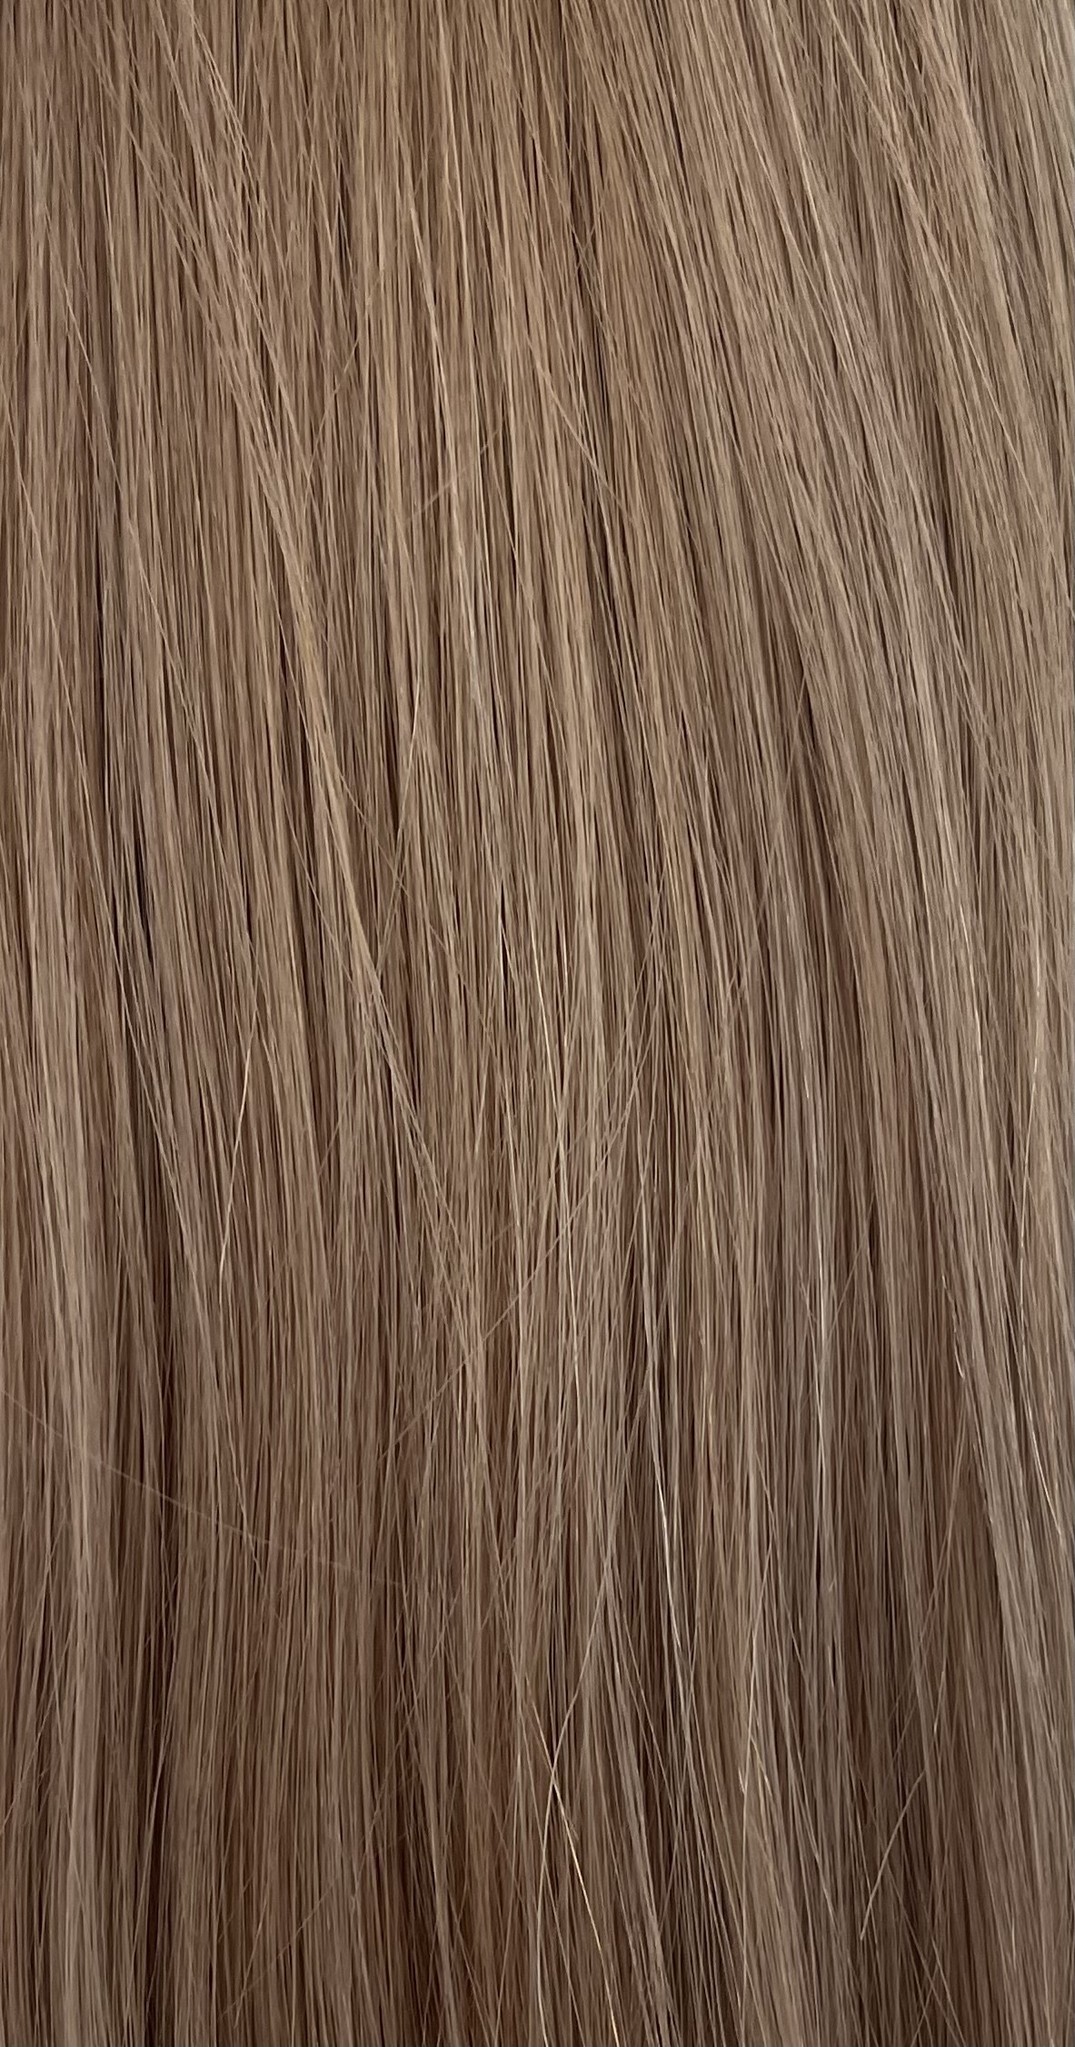 Ultra Thin Weft - Cool Medium Blonde (6.1)-1